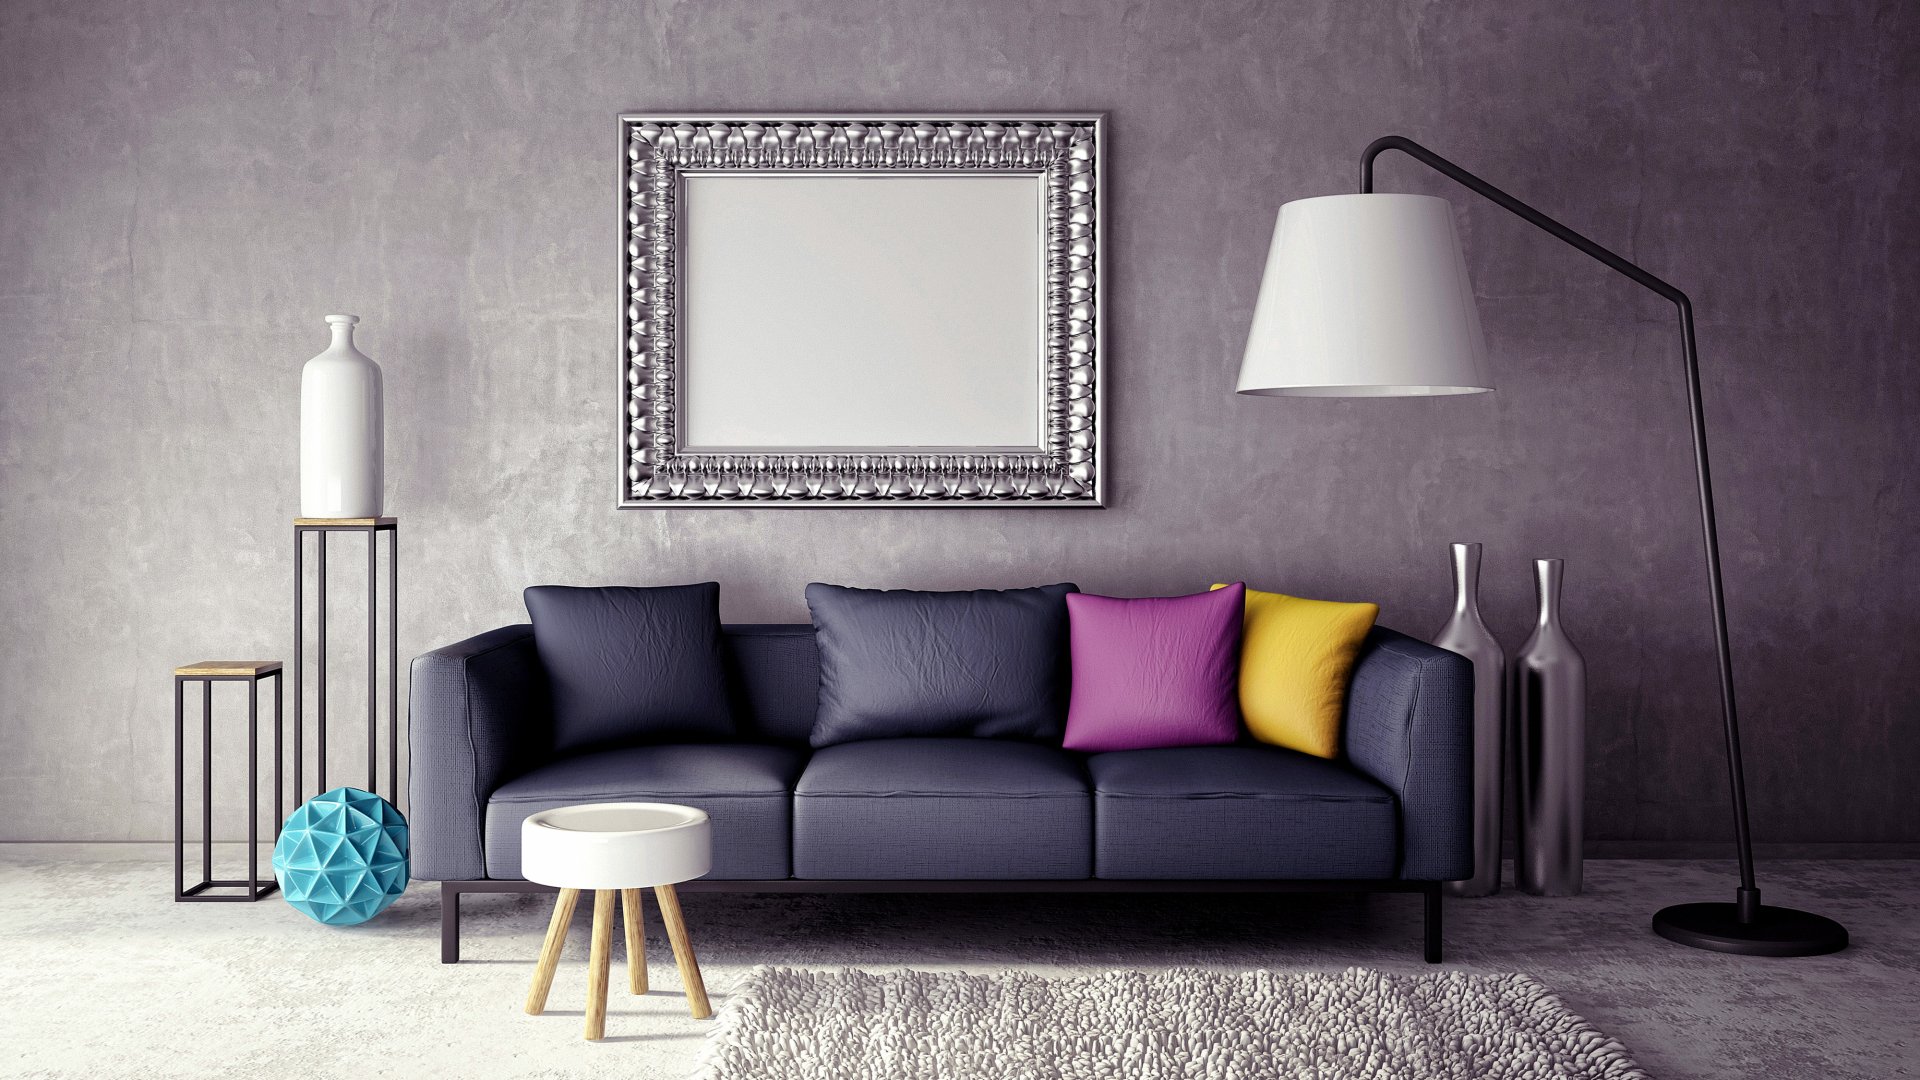 Room 4k Ultra HD Wallpaper | Background Image | 4000x2250 | ID:647571